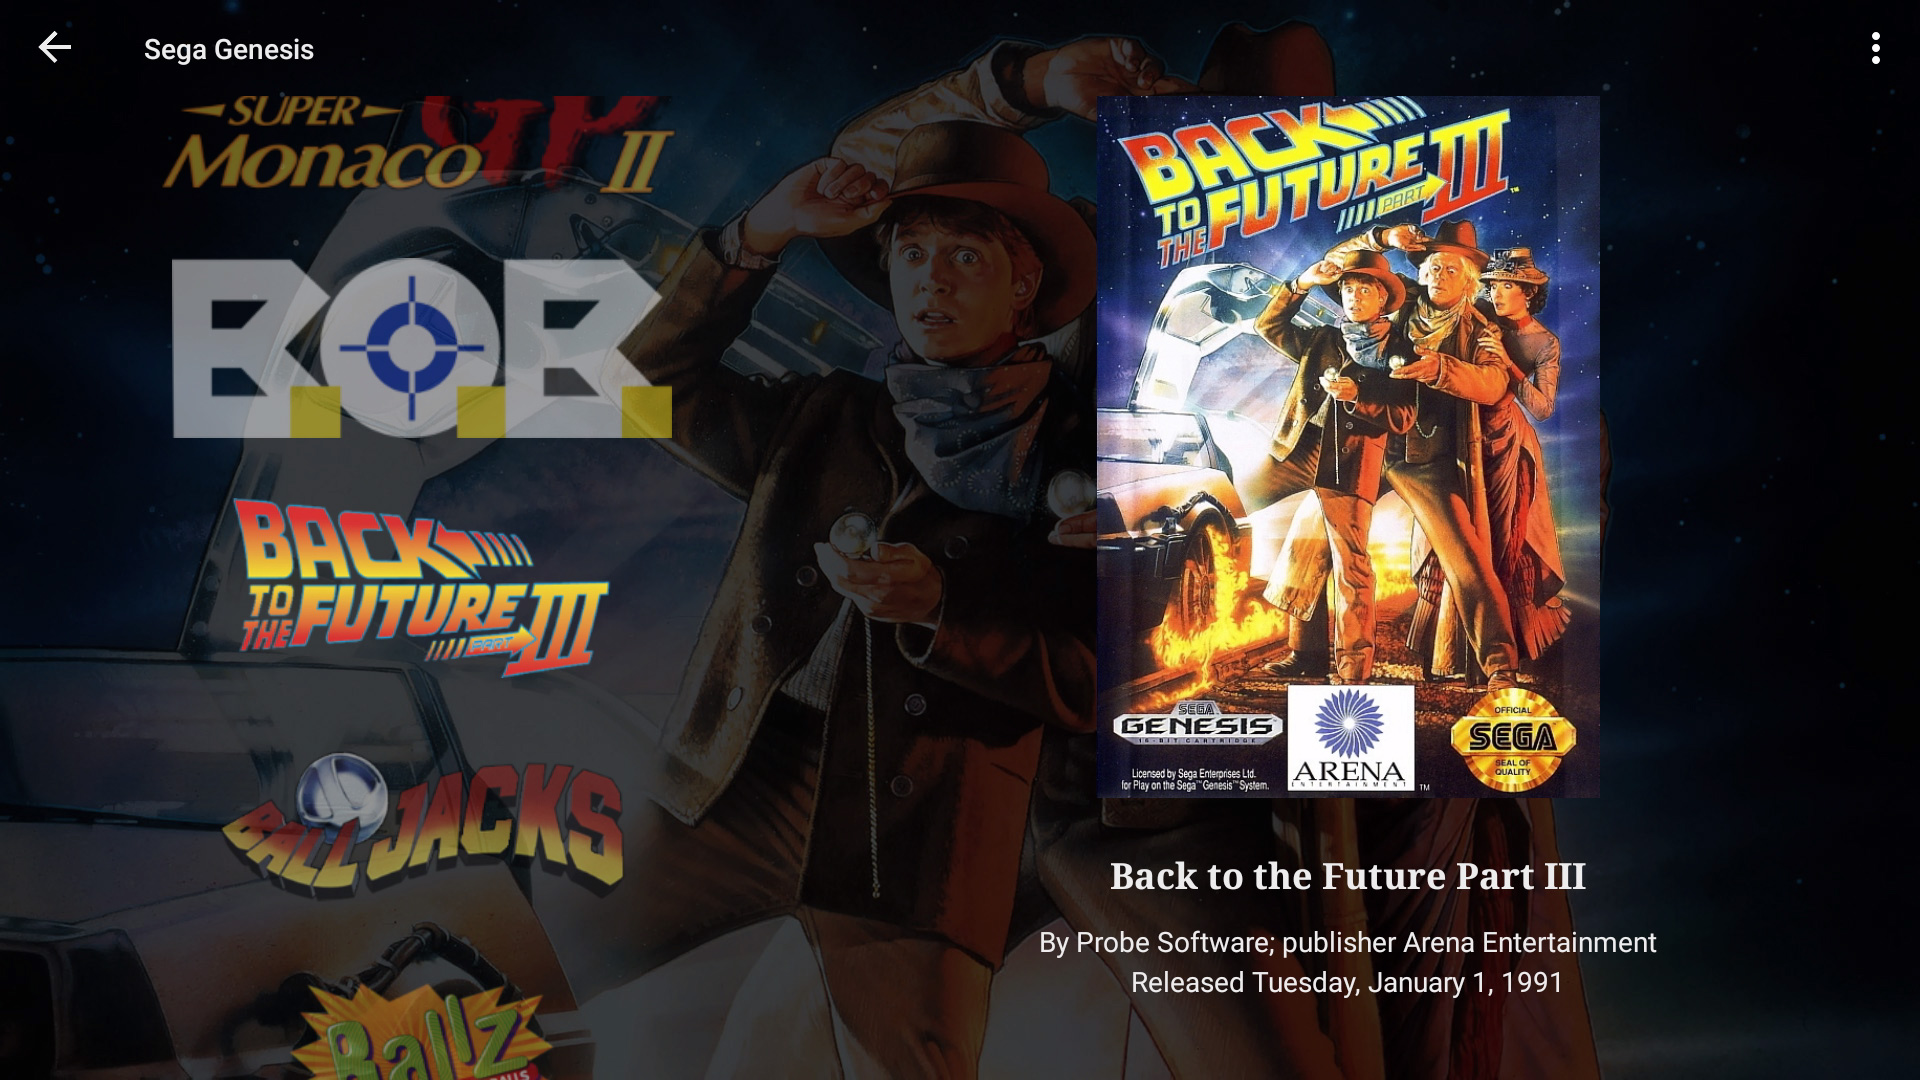 LaunchBox for Android Screenshot - Sega Genesis - Back to the Future Part III